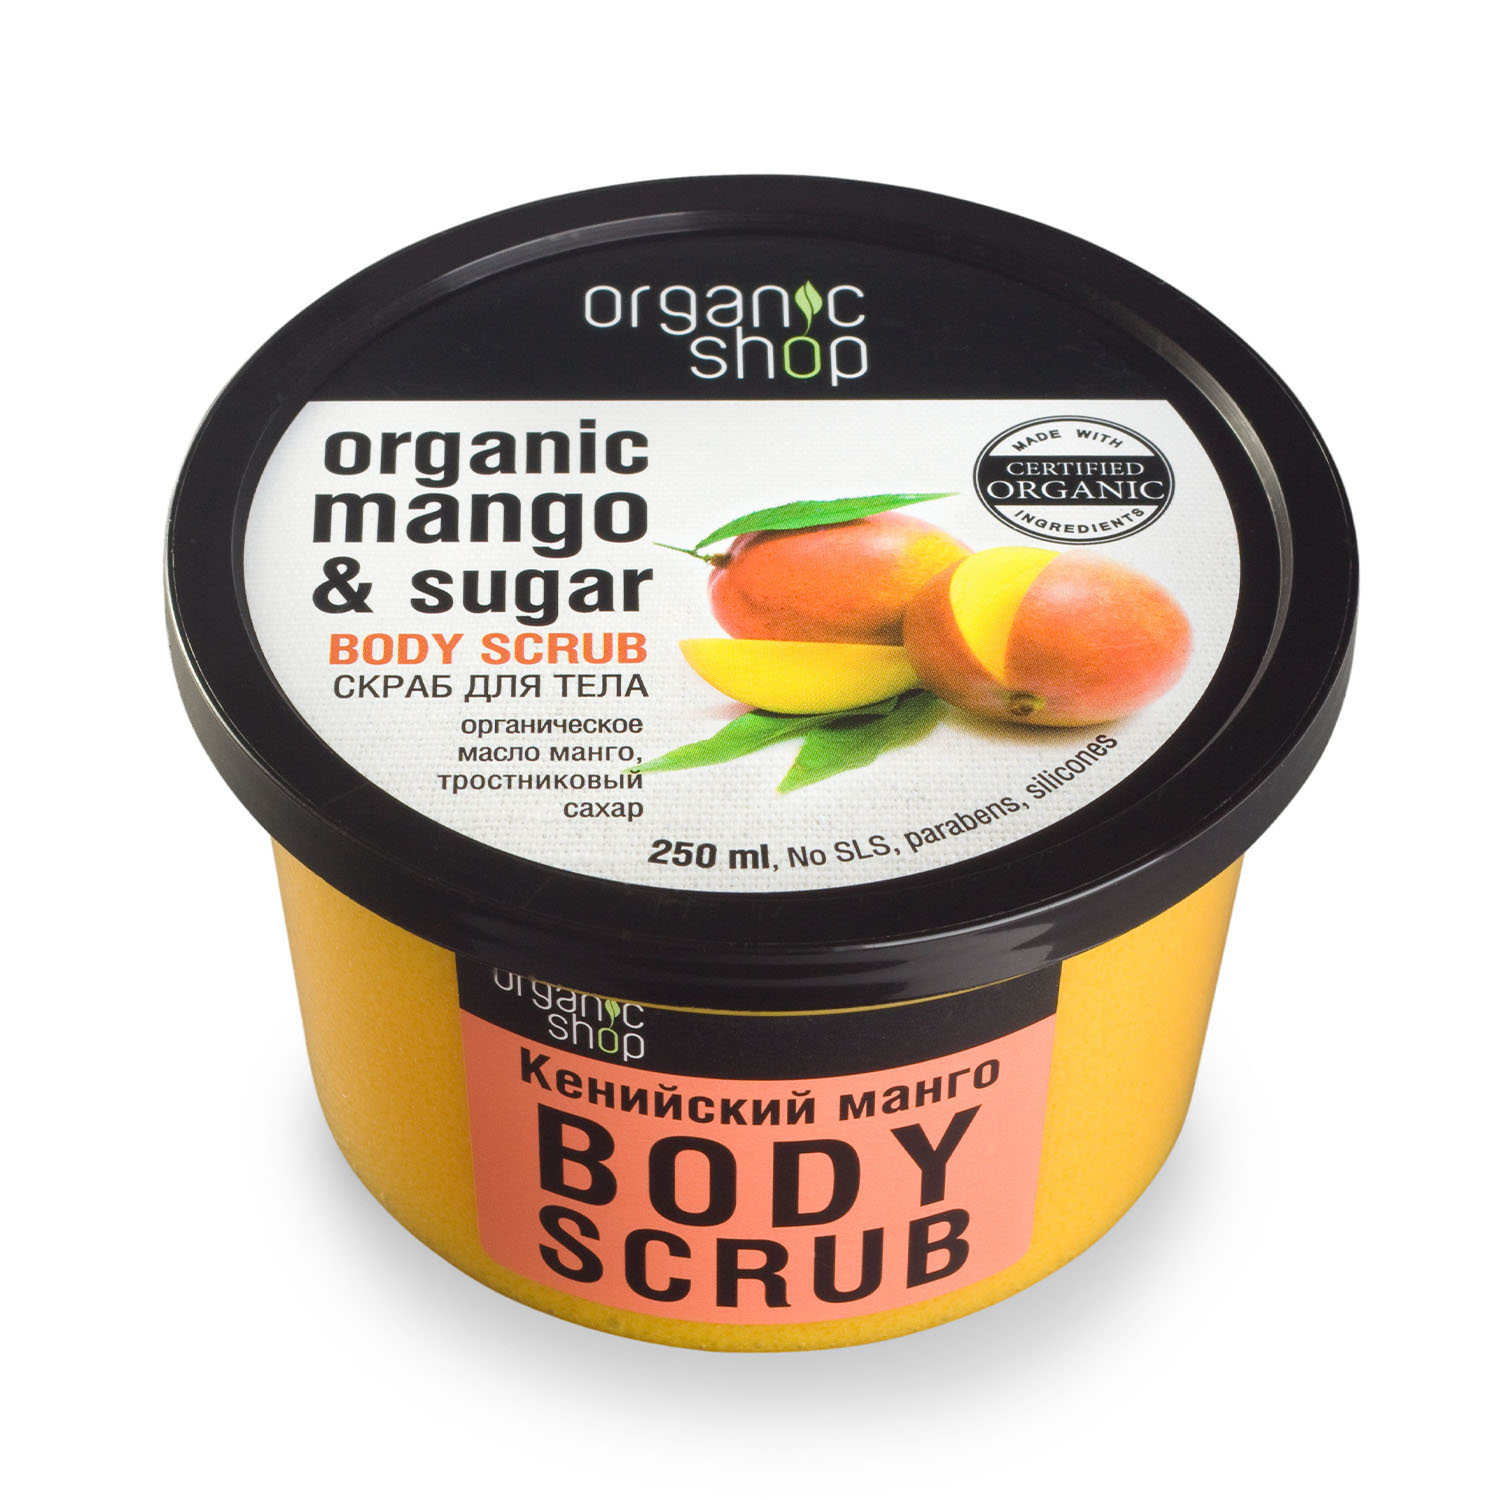 Organic Shop Скраб для тела Кенийский манго, 250 мл (Organic Shop, Классика)